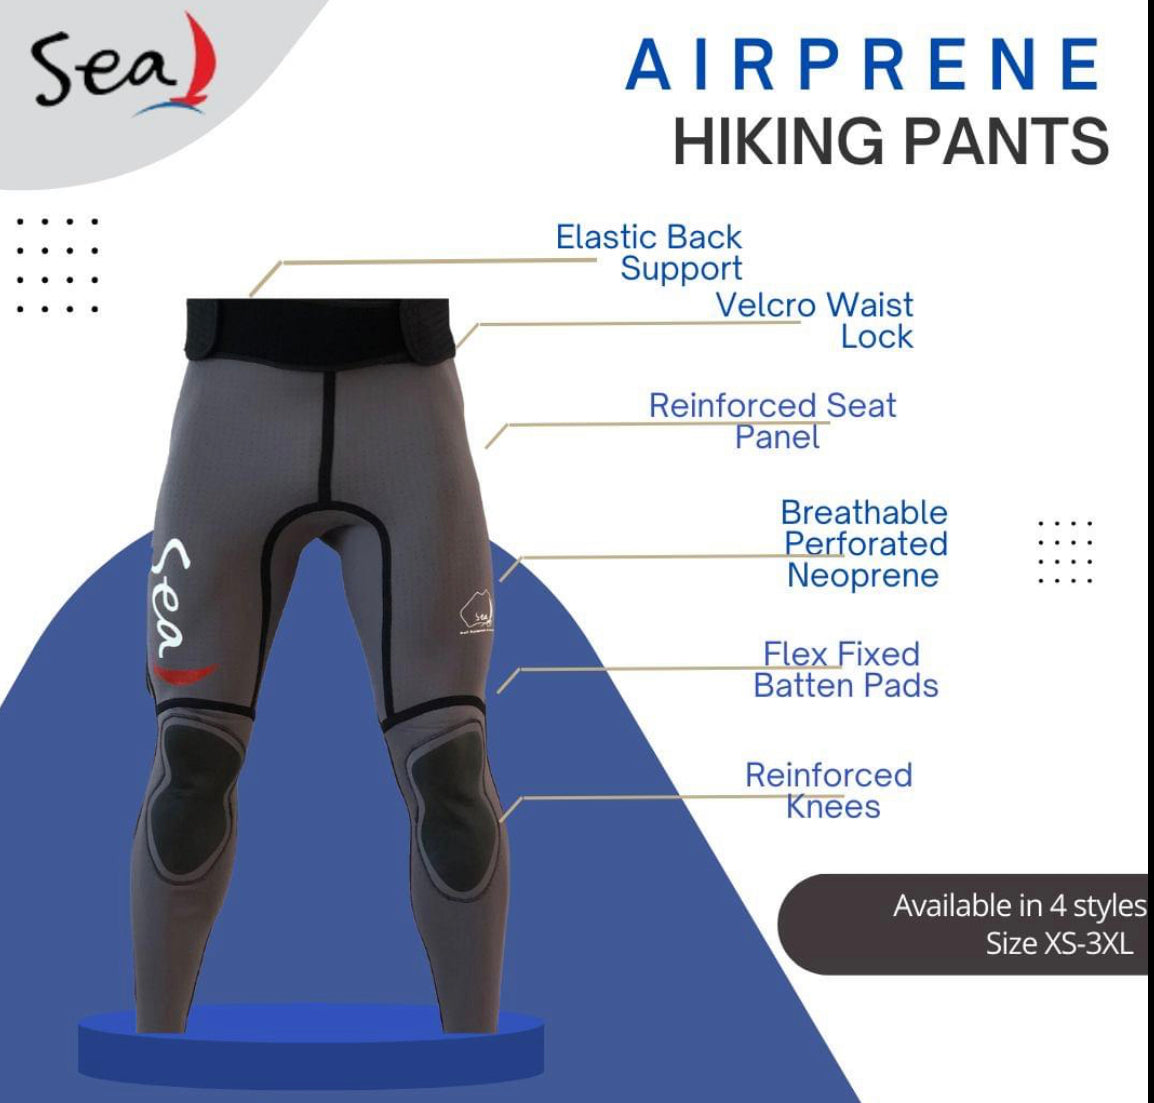 SEA GEAR FULL LENGTH AIRPRENE WAISTLOCK HIKING PANTS